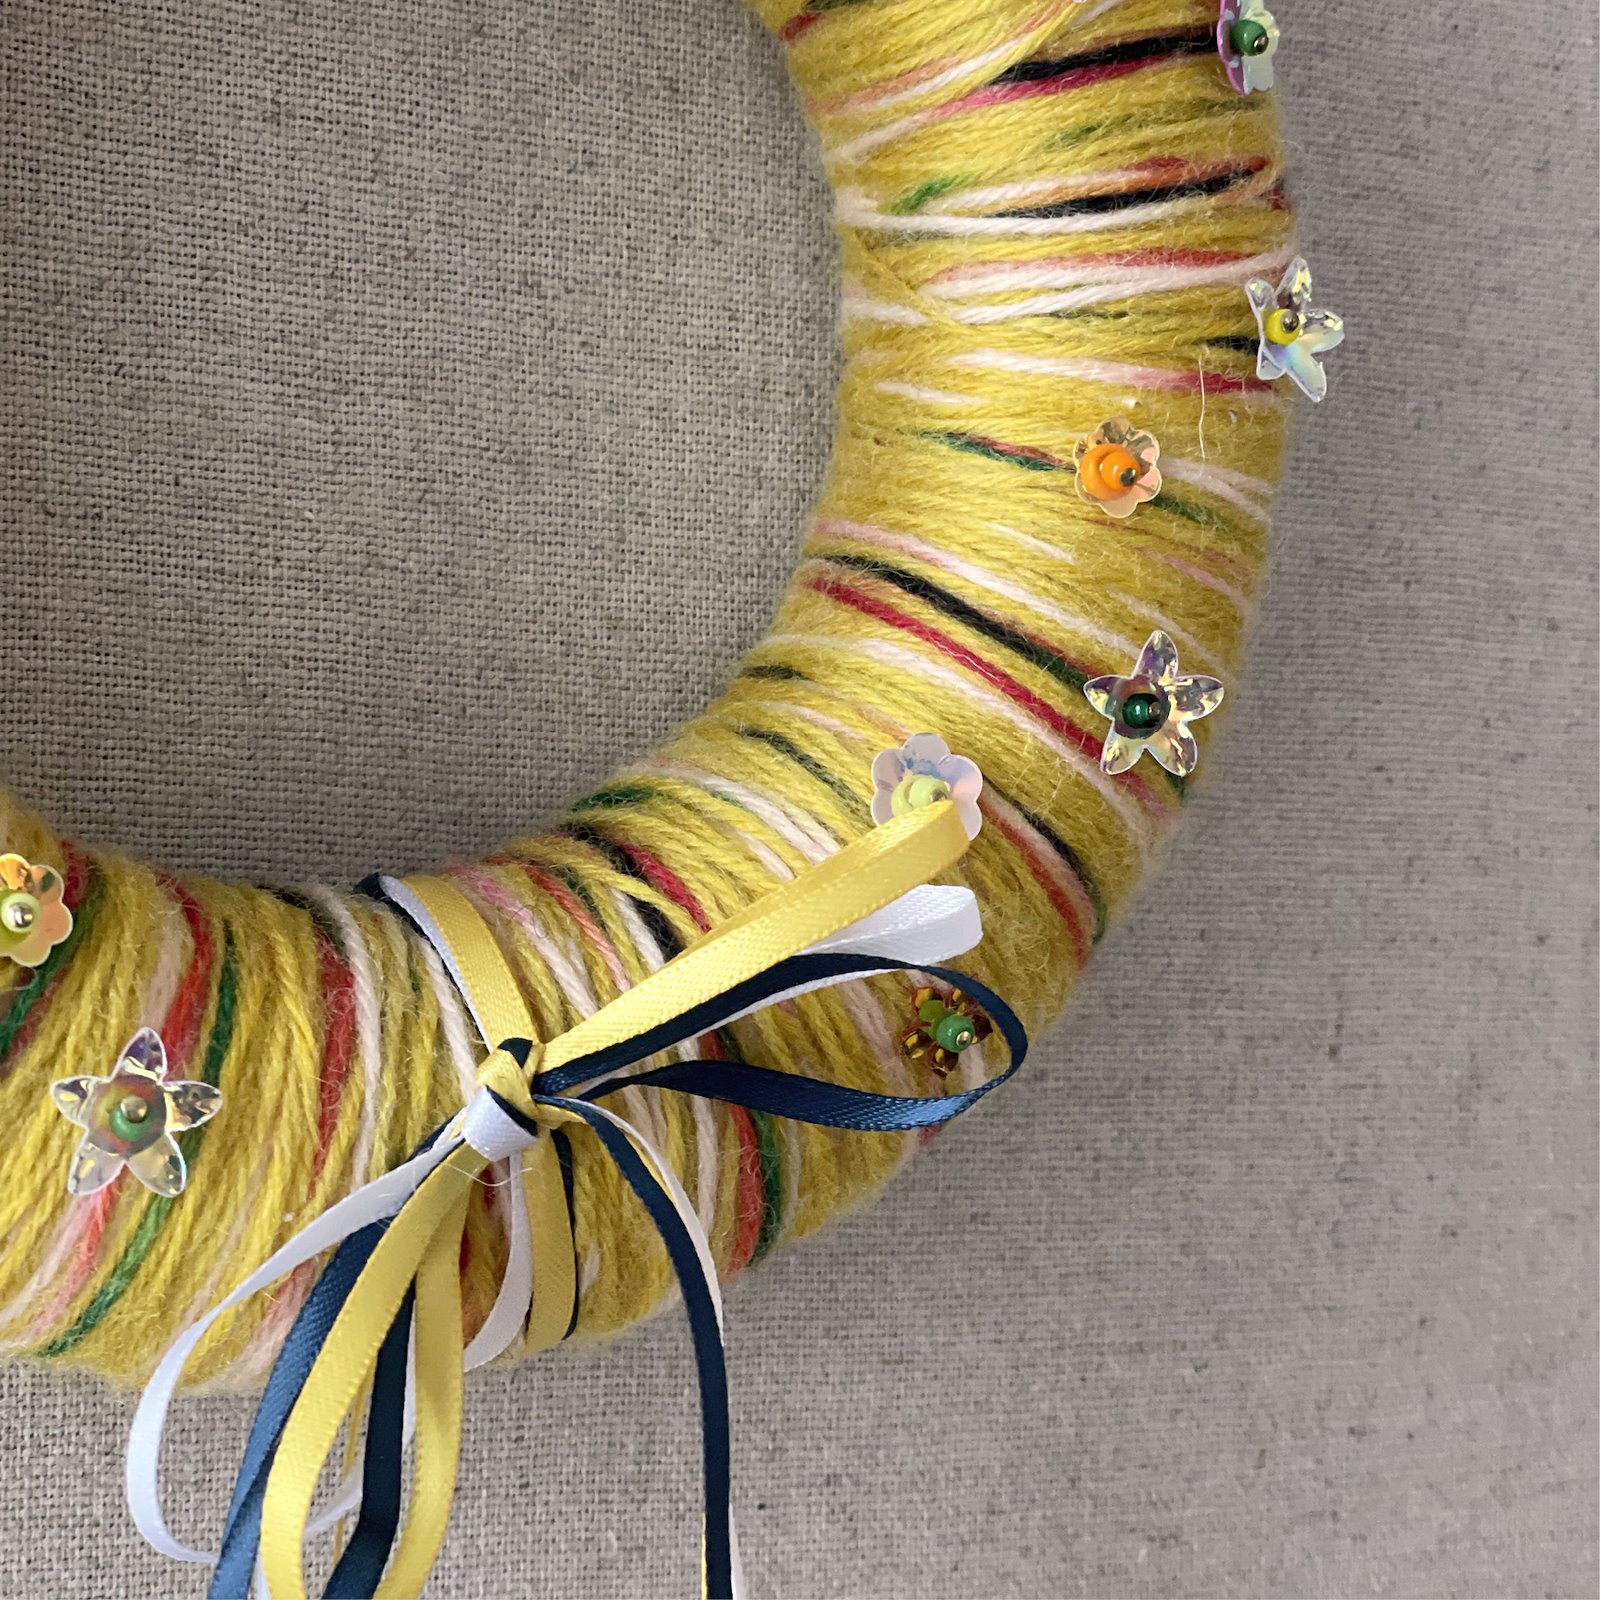 DIY: Yarn-wrapped Easter wreath DIY4308-step3.jpg